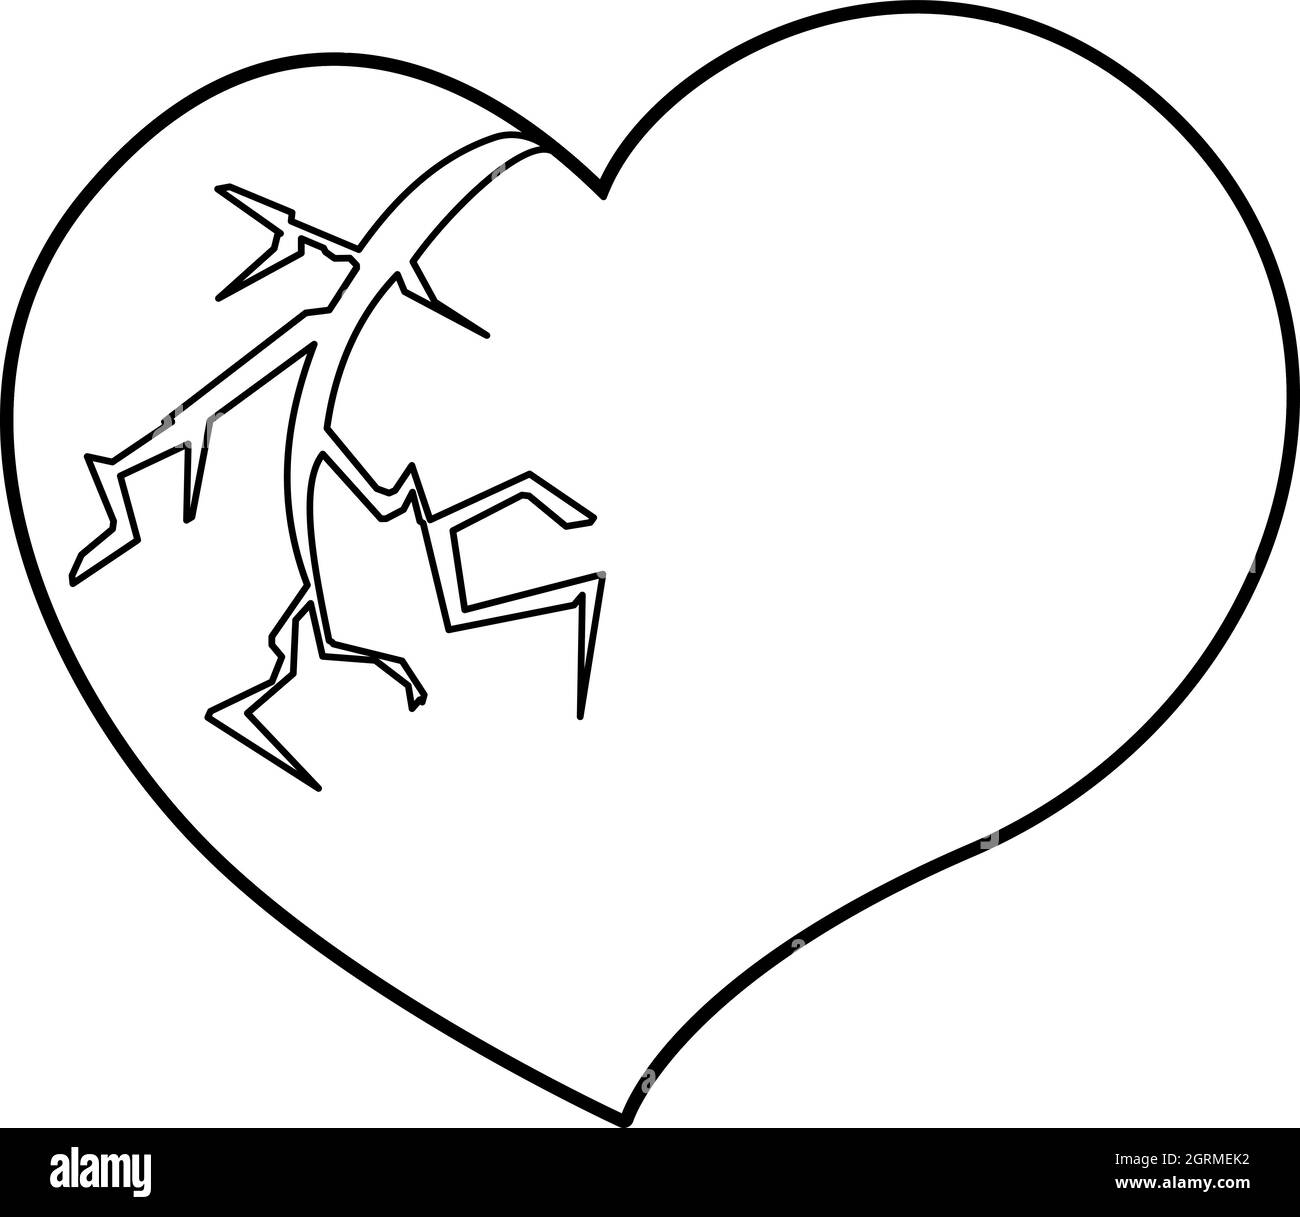 Broken heart icon, outline style Stock Vector